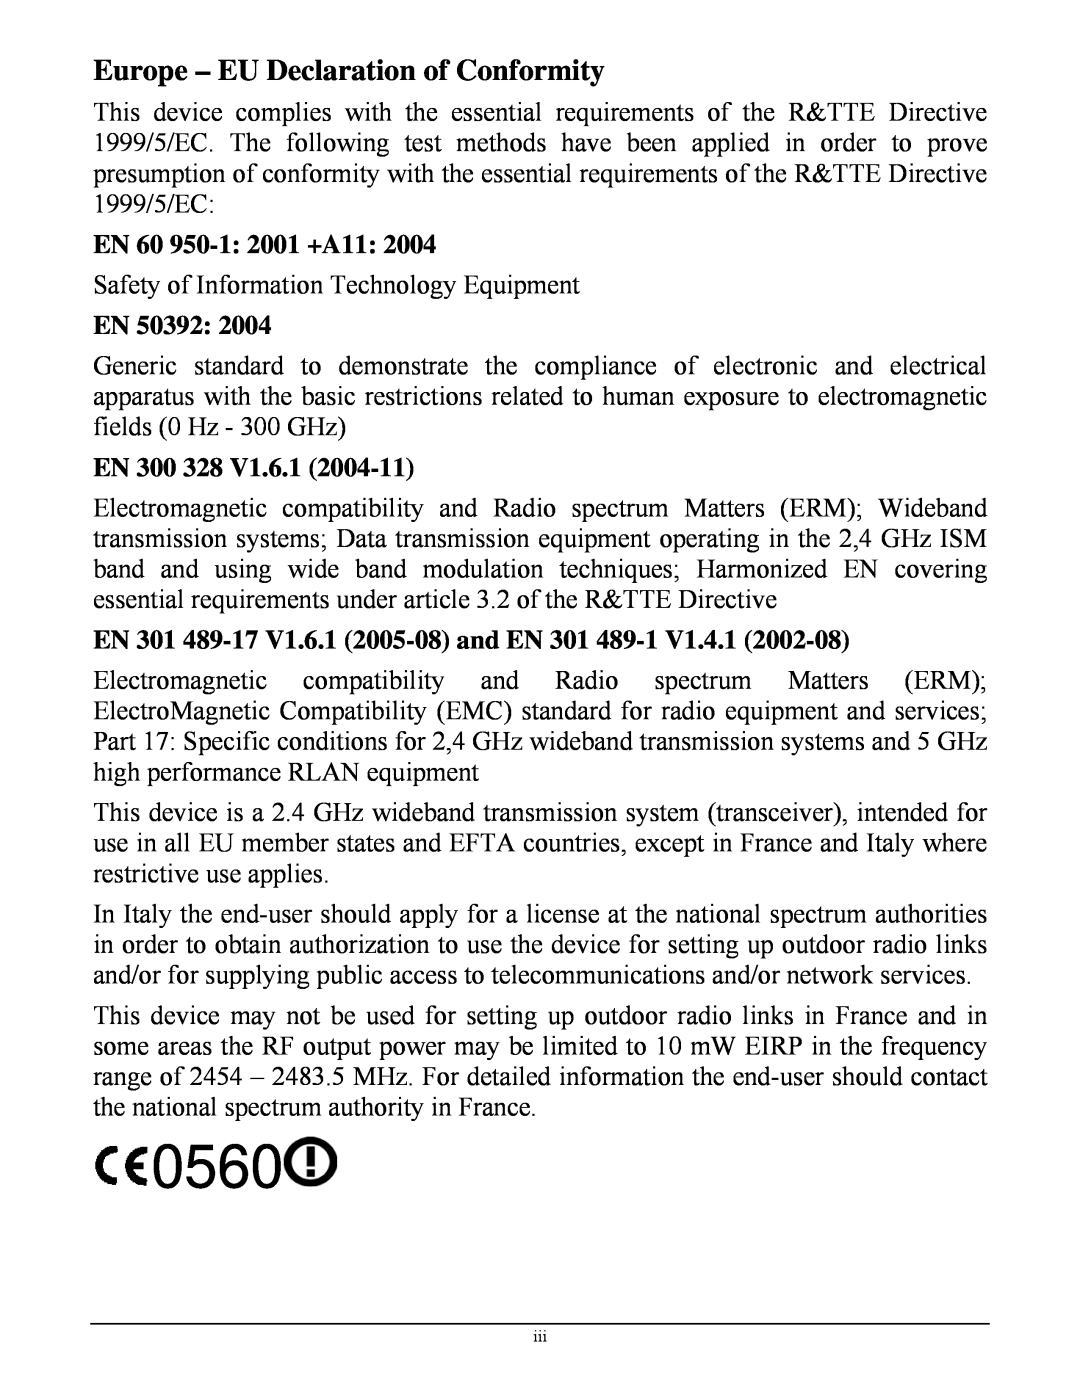 TRENDnet TEW623PI manual Europe - EU Declaration of Conformity, EN 60 950-1 2001 +A11, EN 50392, EN 300 328 V1.6.1, 0560 